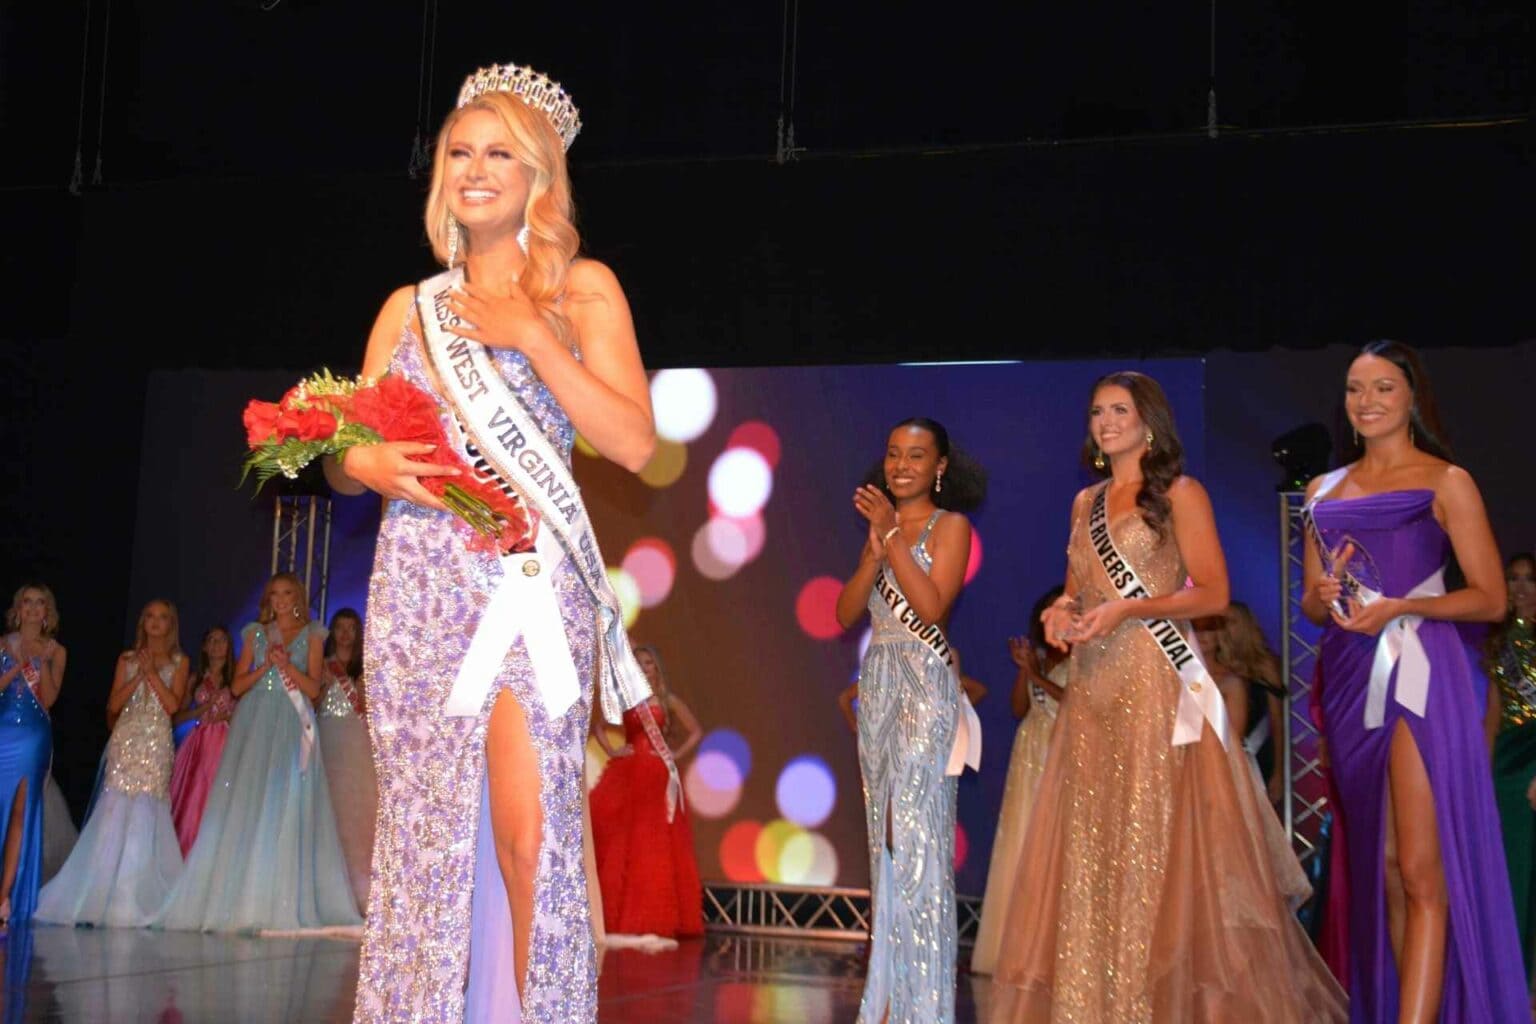 Morgantown native wins Miss West Virginia USA 2022 title